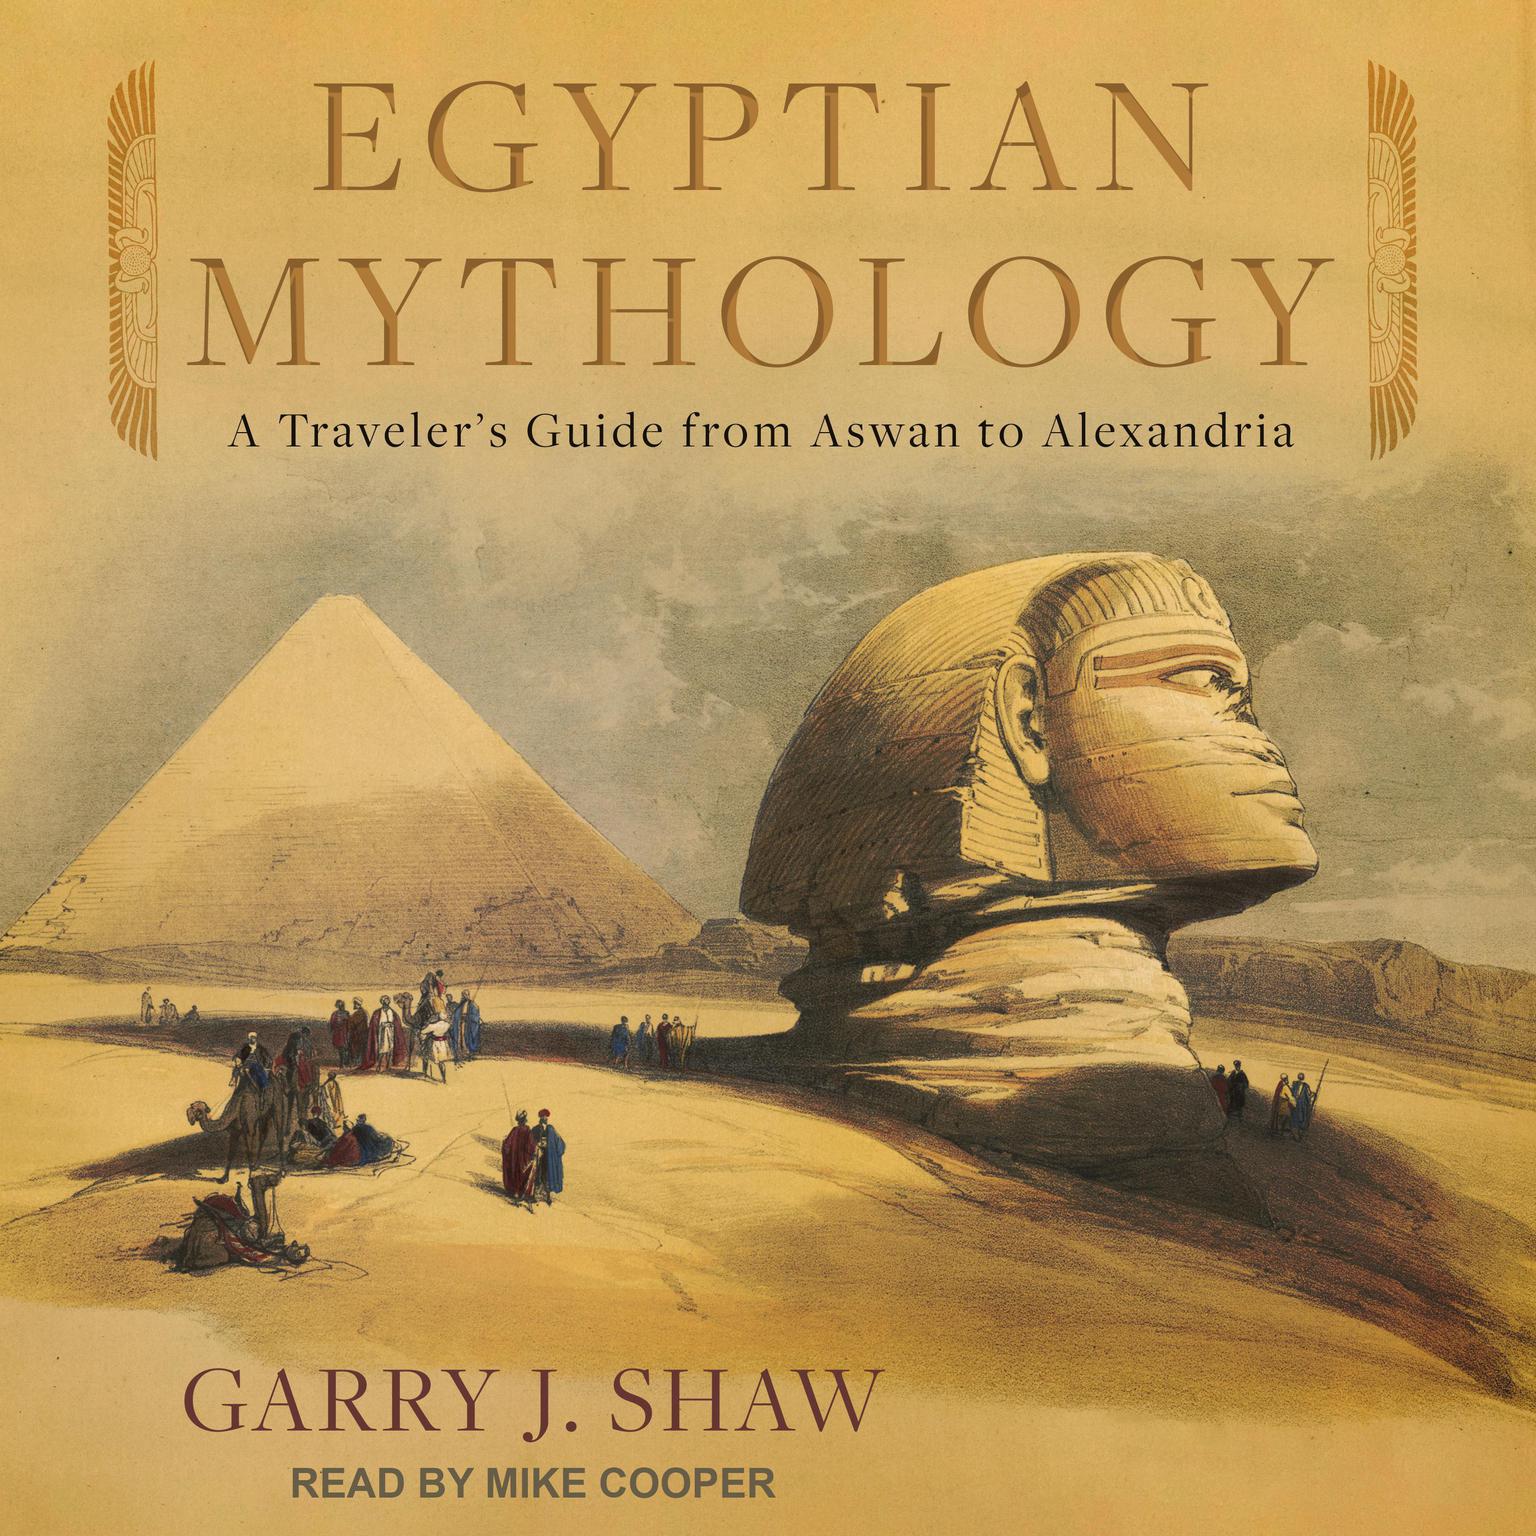 Egyptian Mythology Audiobook by Garry J. Shaw — Love it Guarantee